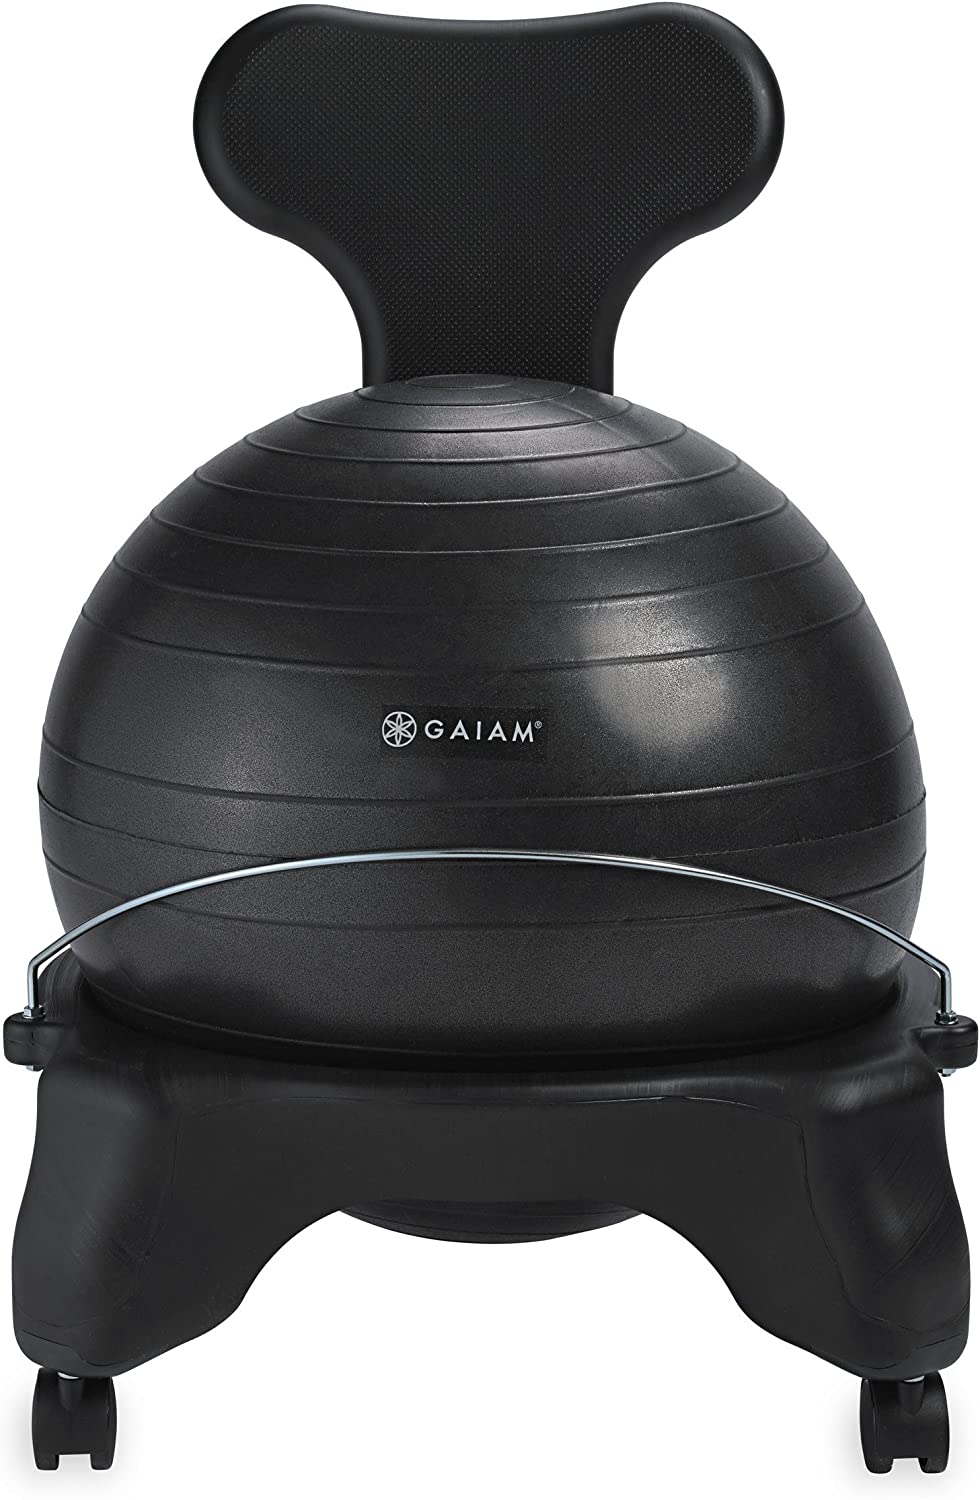 Gaiam Energy Boosting Balance Ball Desk Office Chair